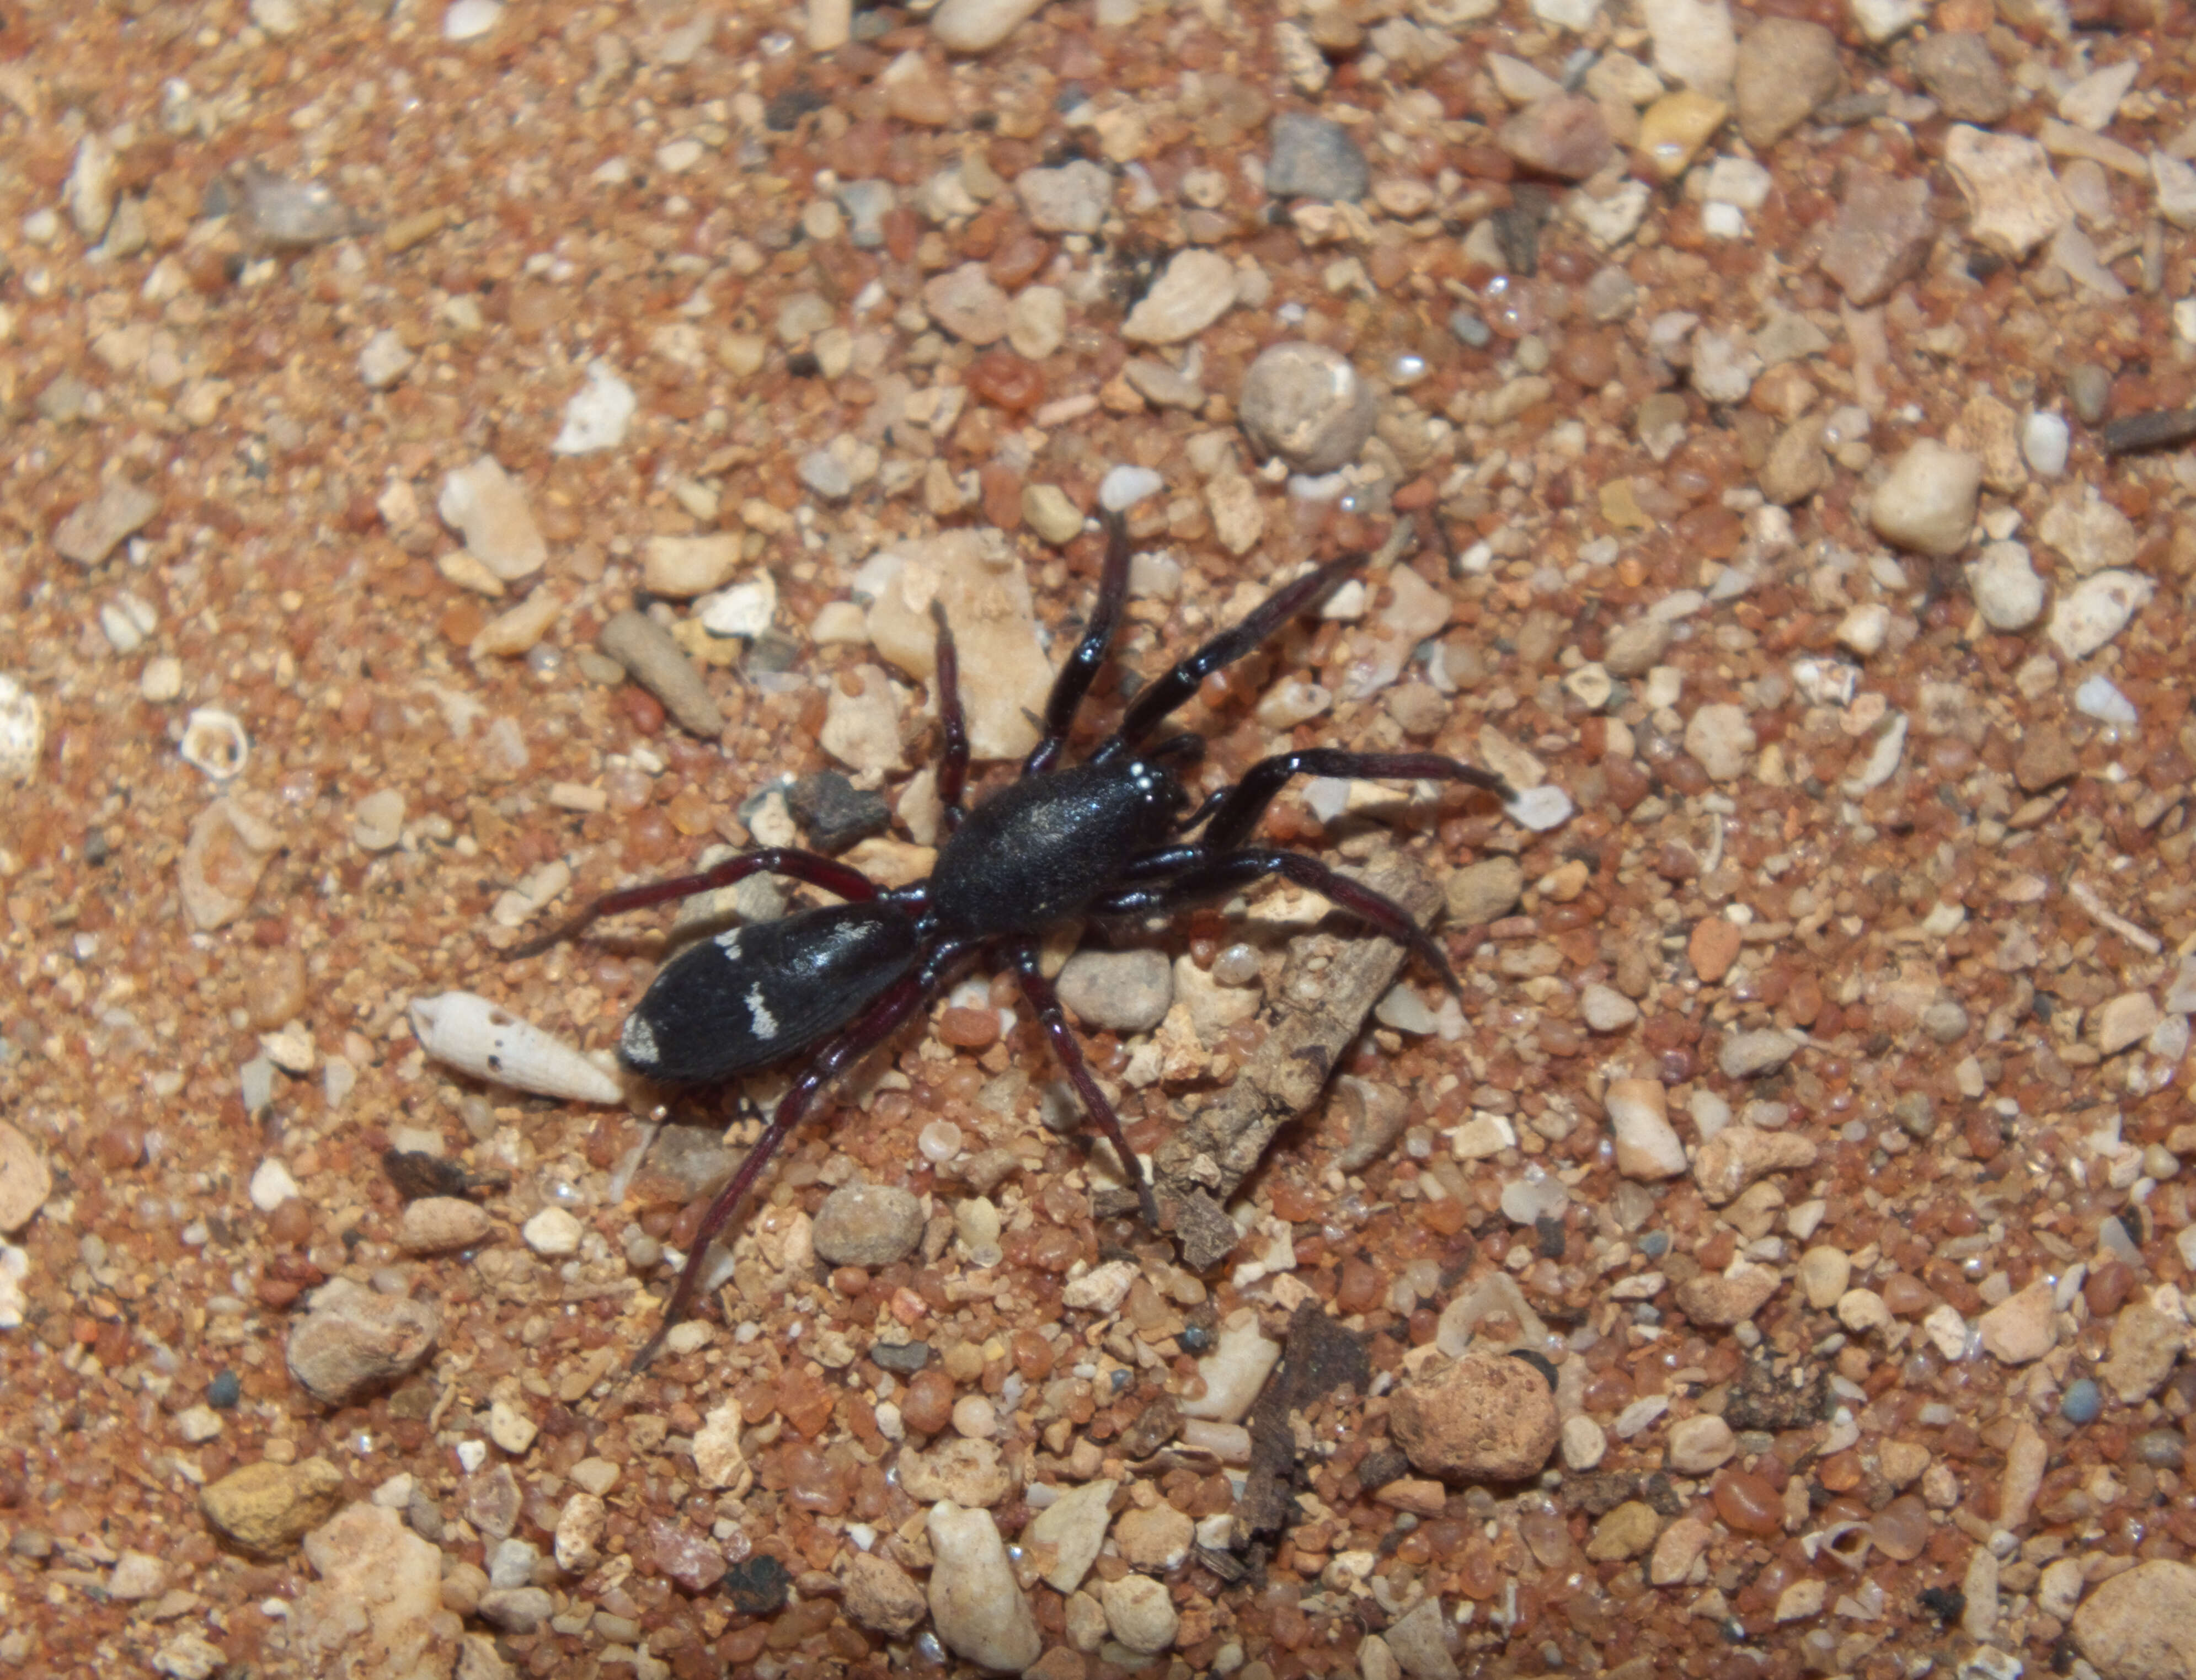 Image of zodariid ground spiders